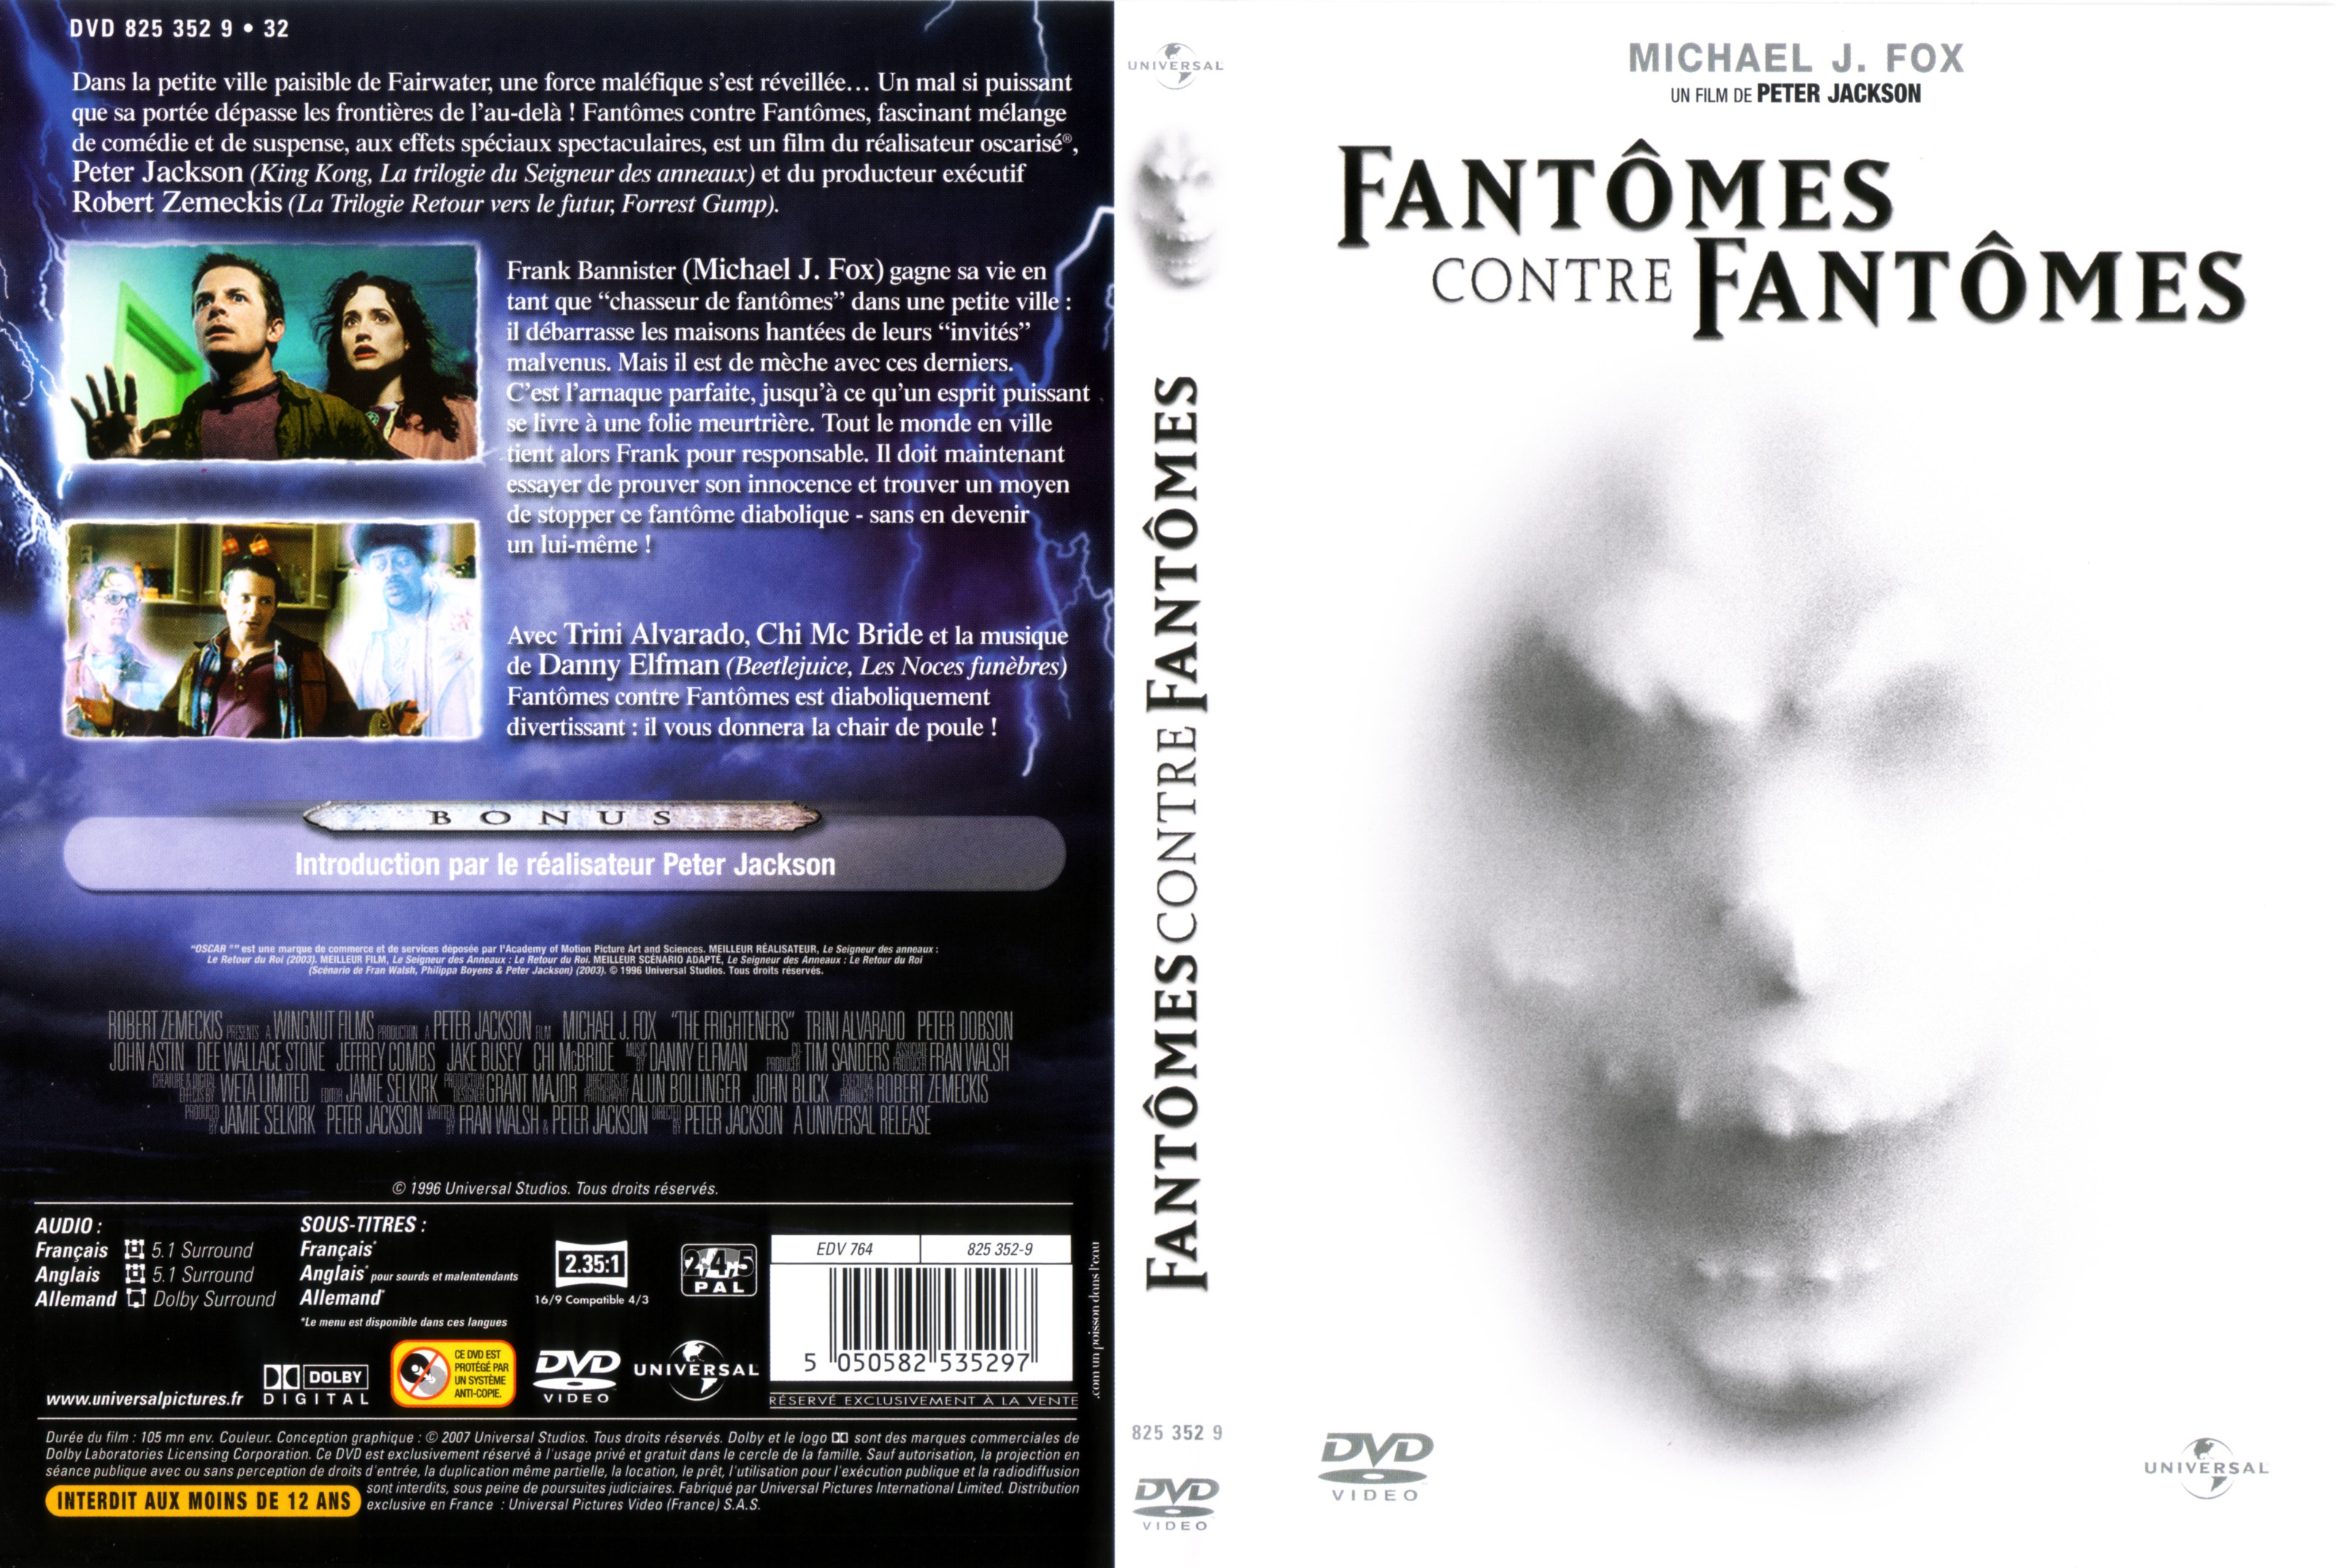 Jaquette DVD Fantomes contre fantomes v5